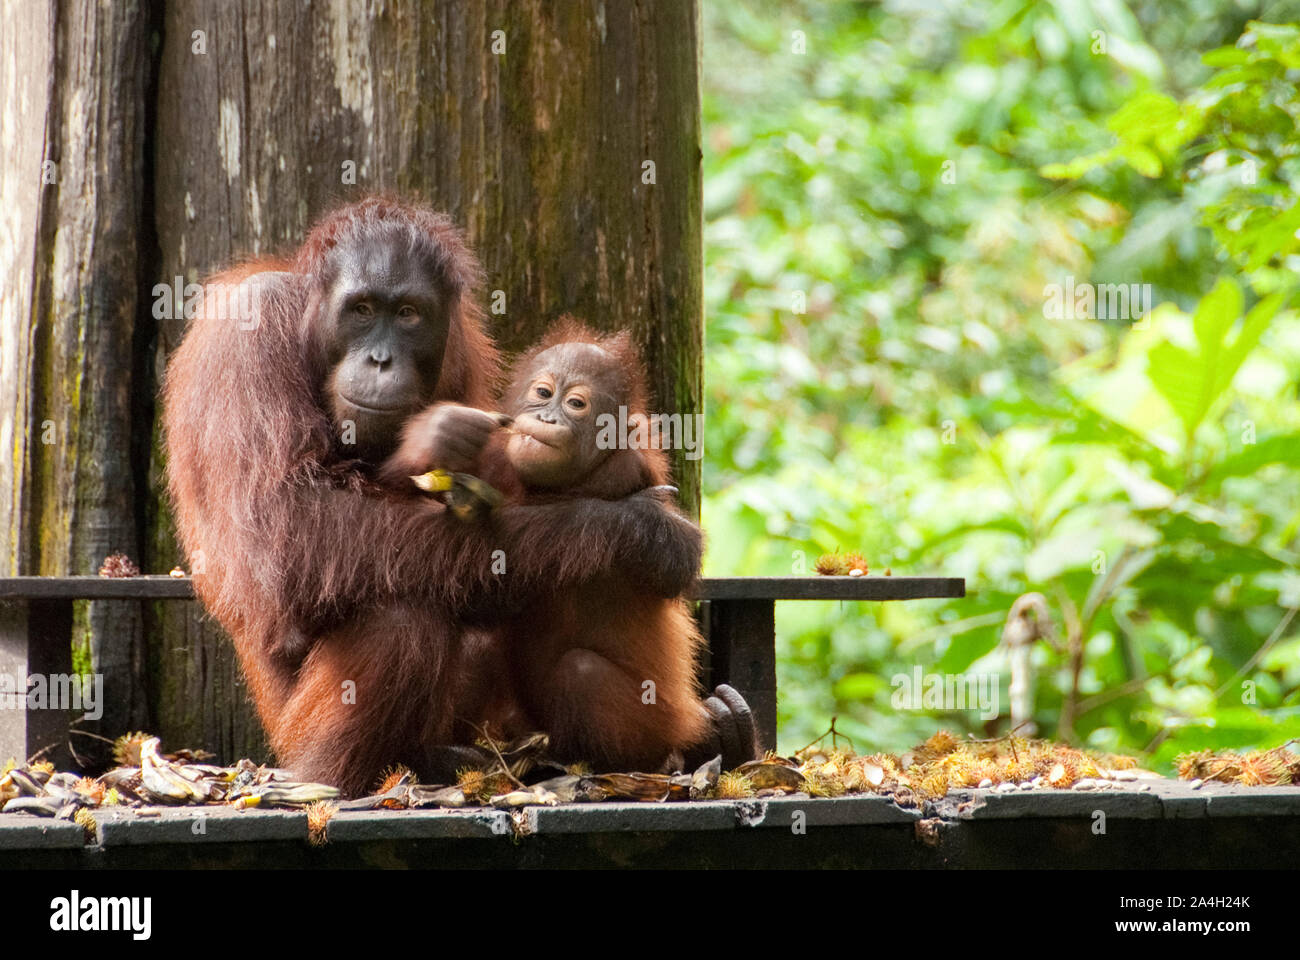 Orangutan, Pongo pygmaeus, with baby on feeding platform, Sepilok Orangutan Rehabilitation Centre, Sandakan, Sabah, Northeastern Borneo, Malaysia Stock Photo